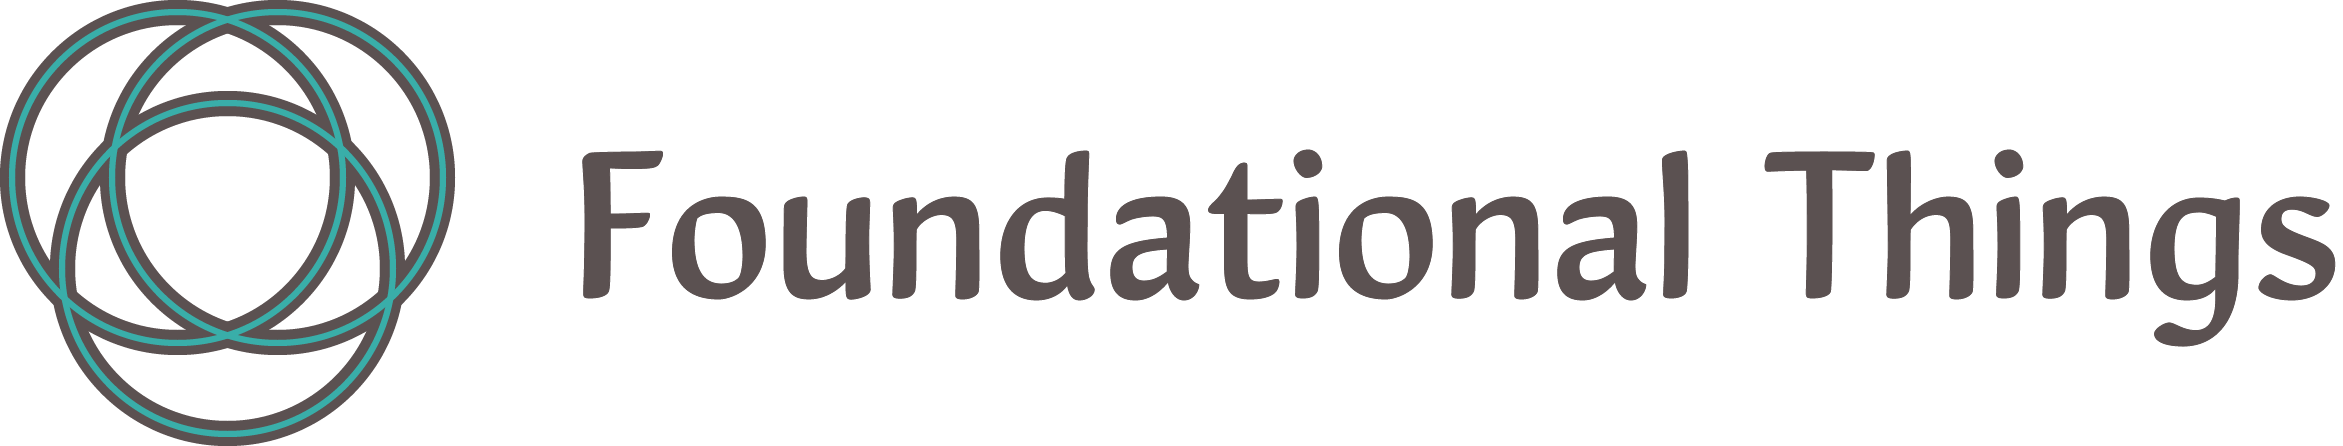 Foundational Things Logo